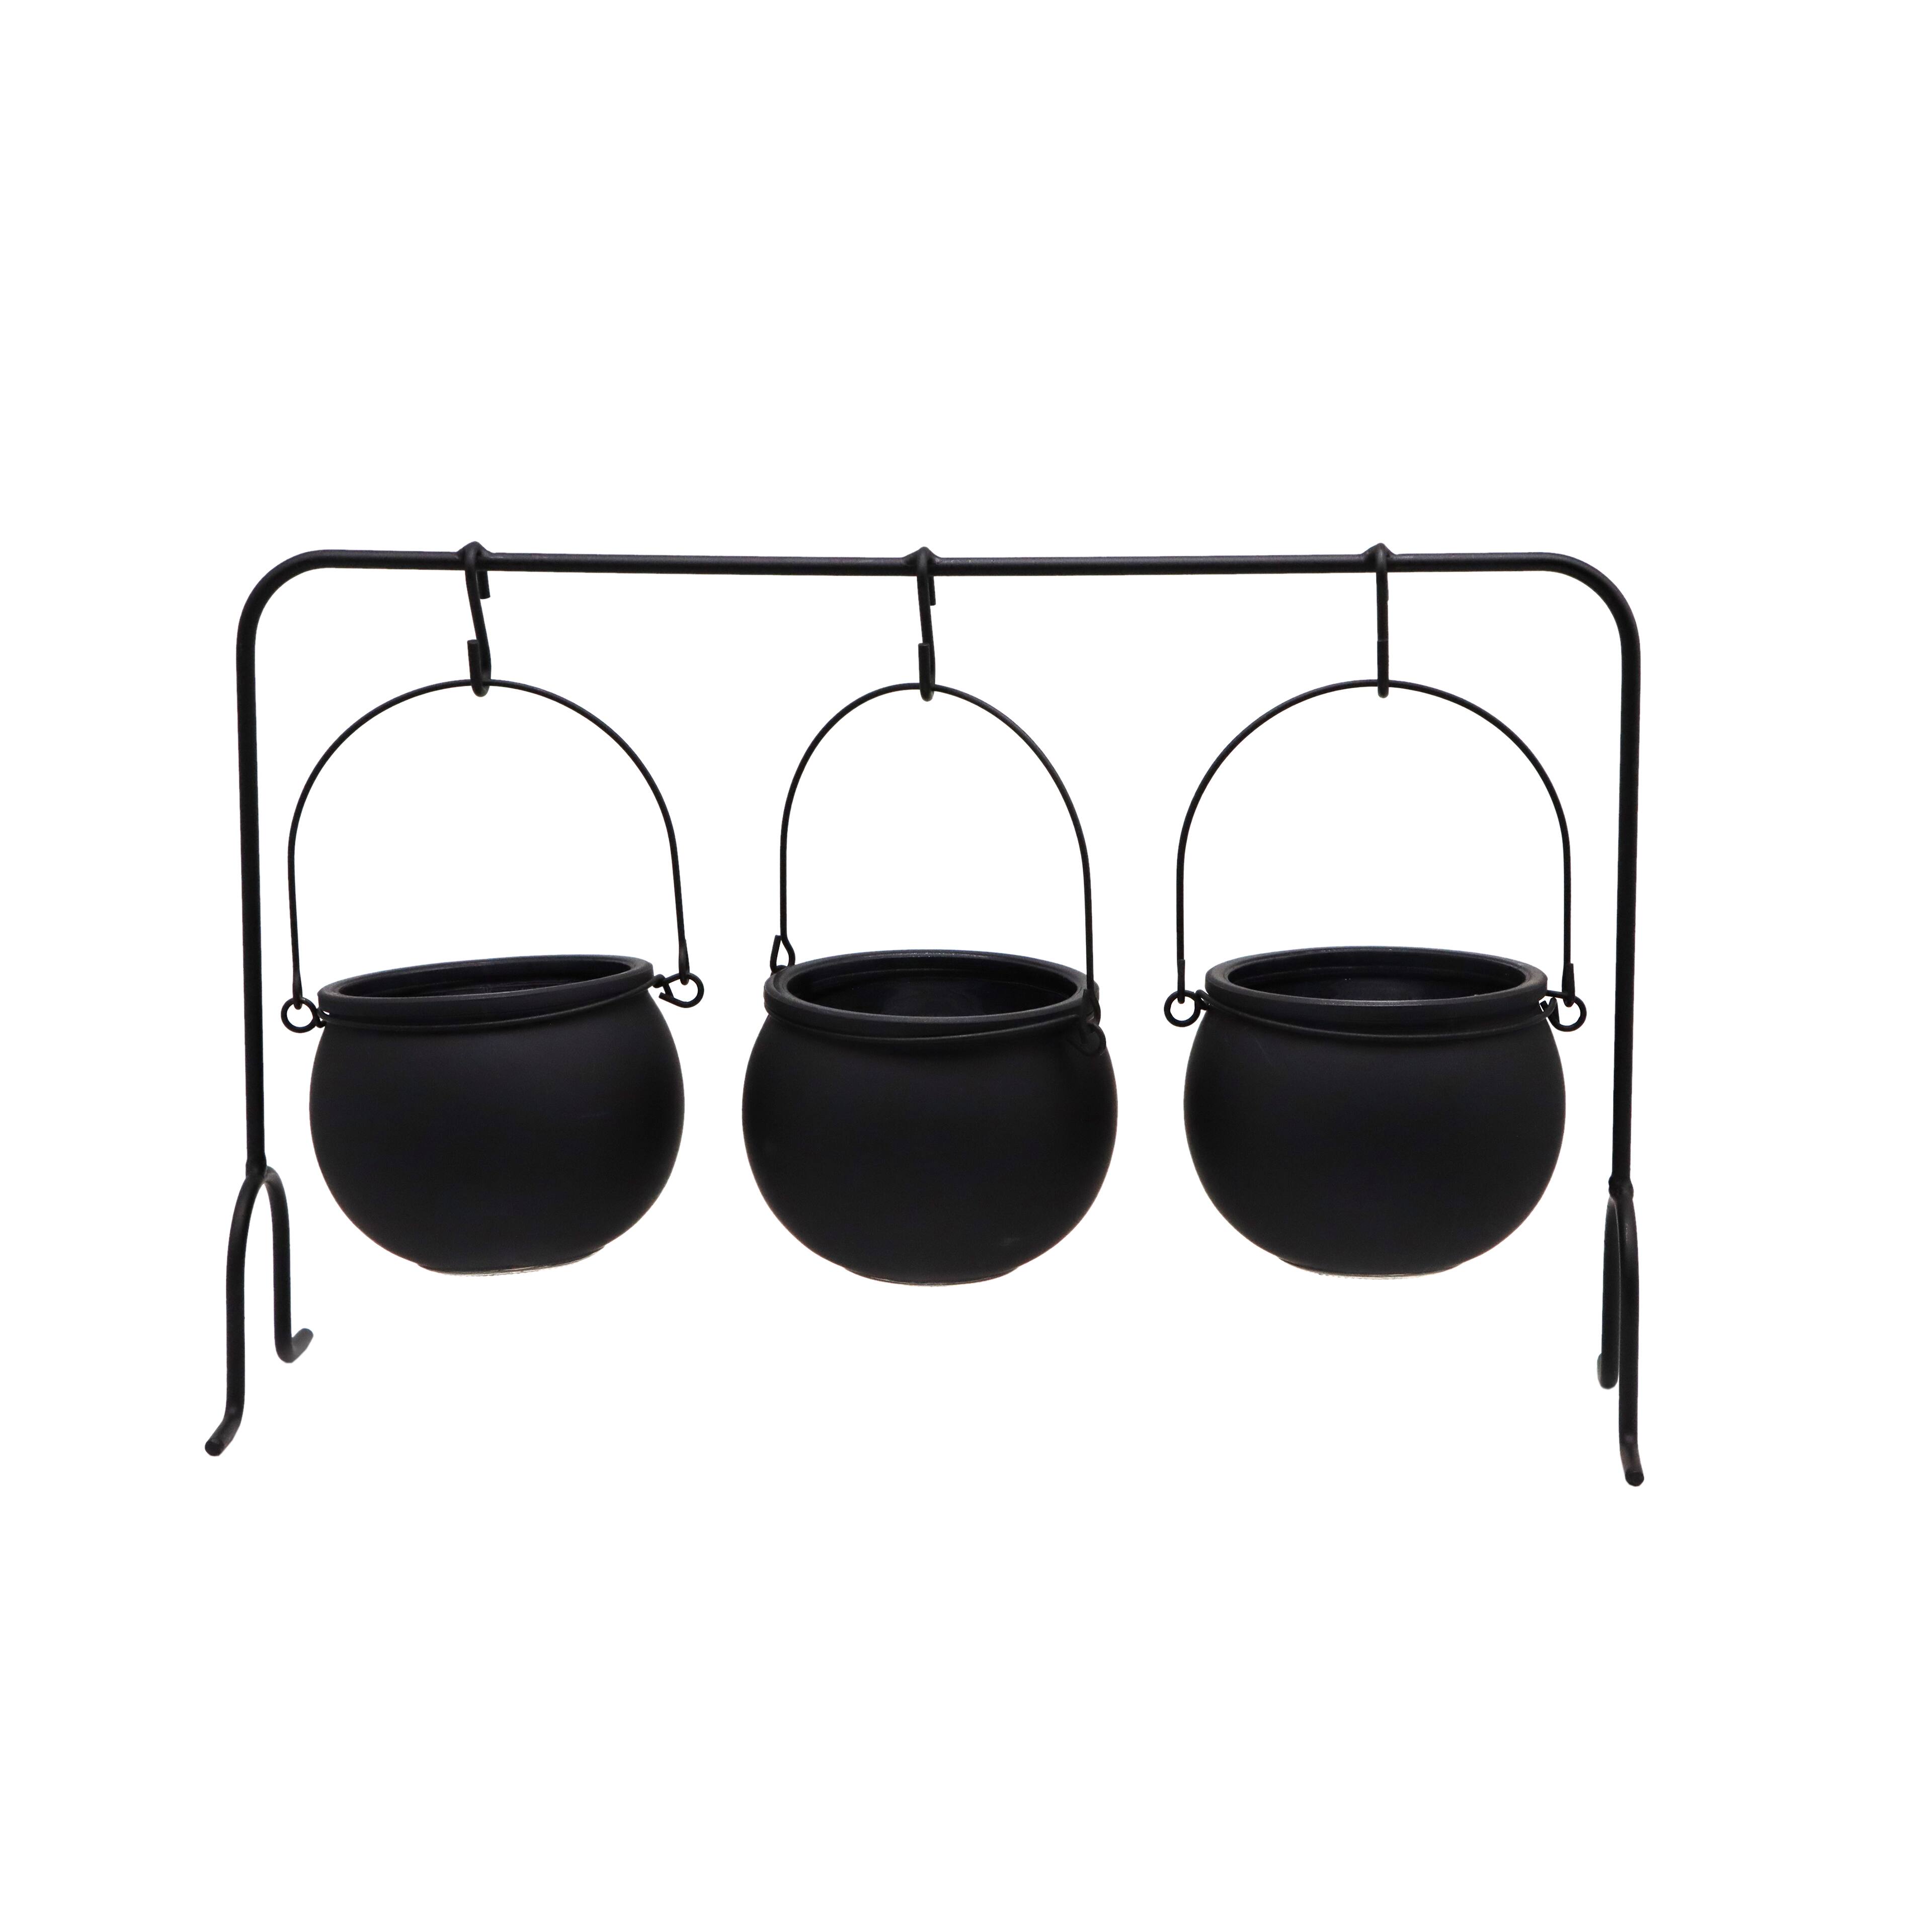 9" Black Glass Hanging Cauldrons Accent